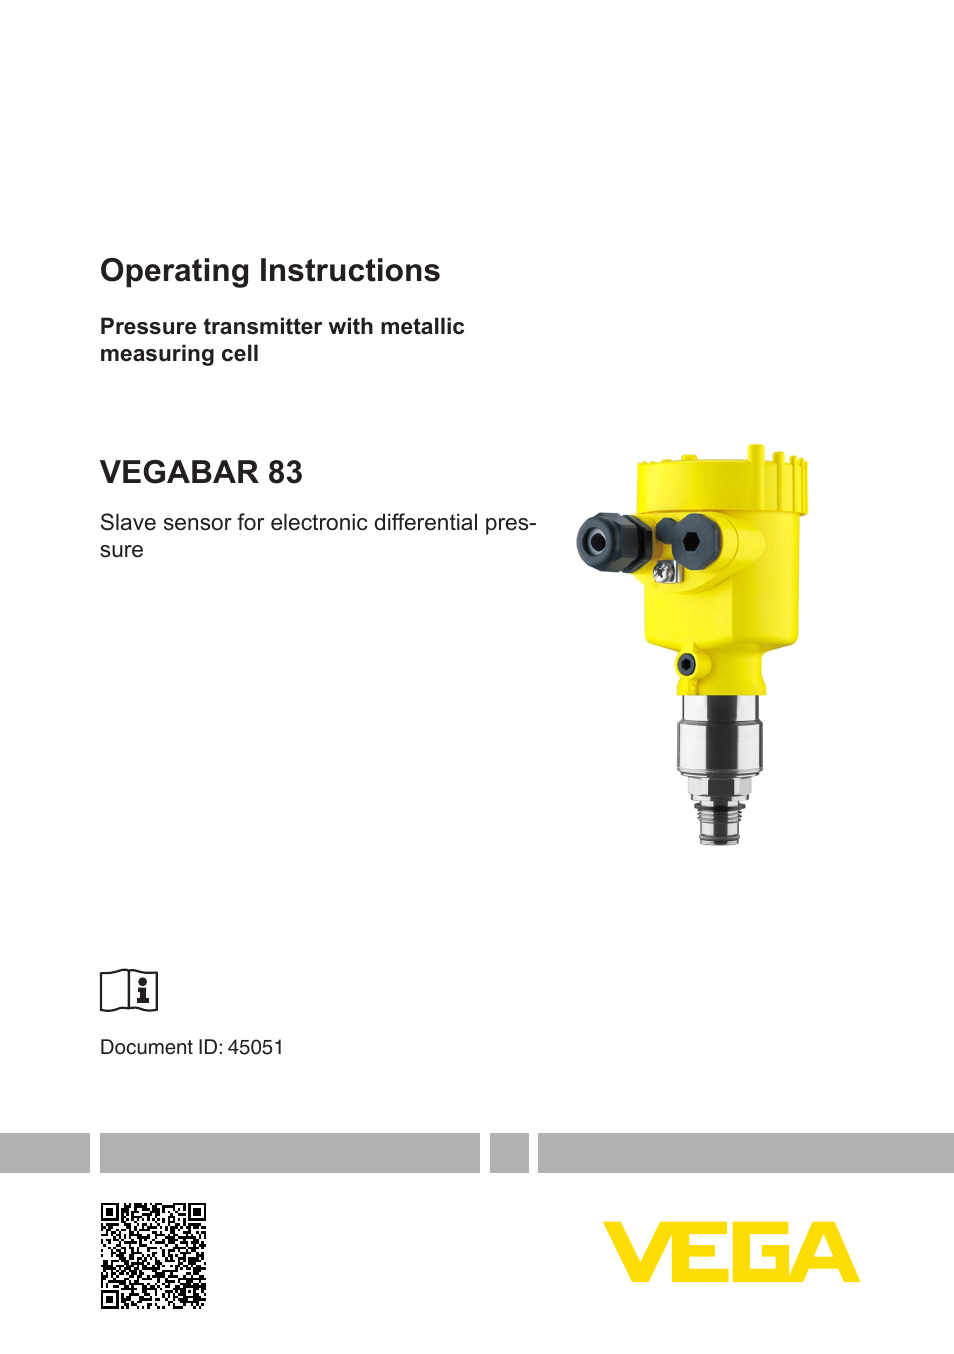 VEGABAR 83 Save sensor - Operating Instructions